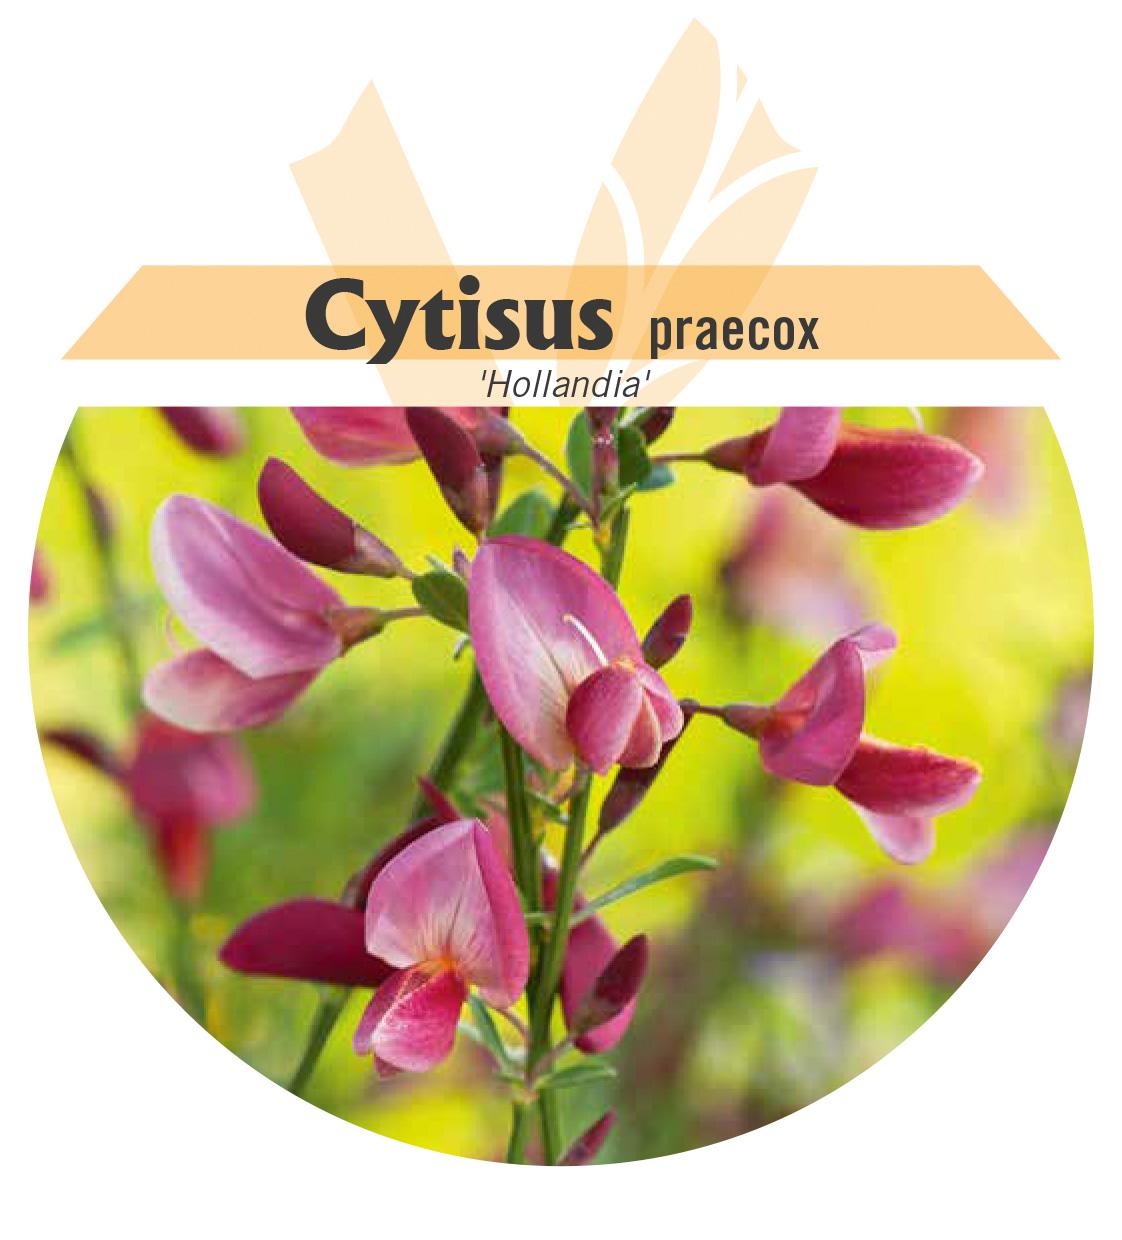 Cytisus praecox